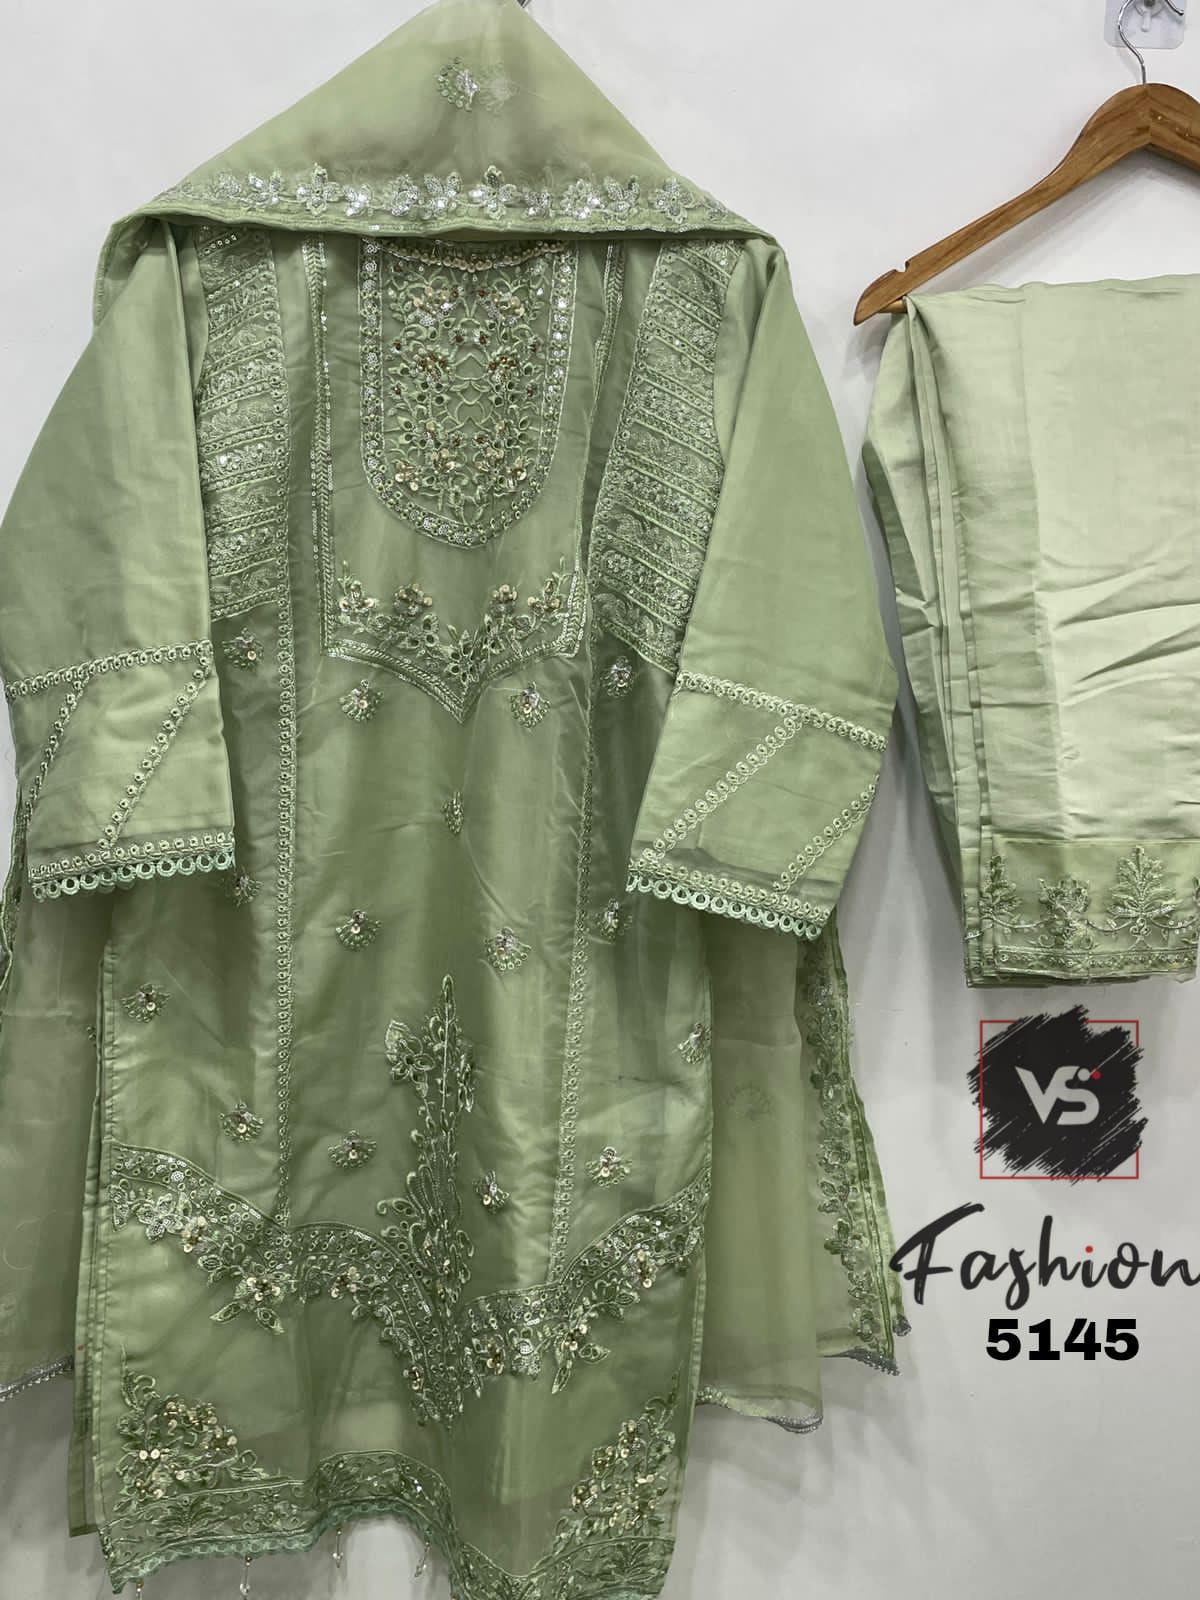 5145 Vs Fashion Organza Pakistani Readymade Suits Wholesale Price